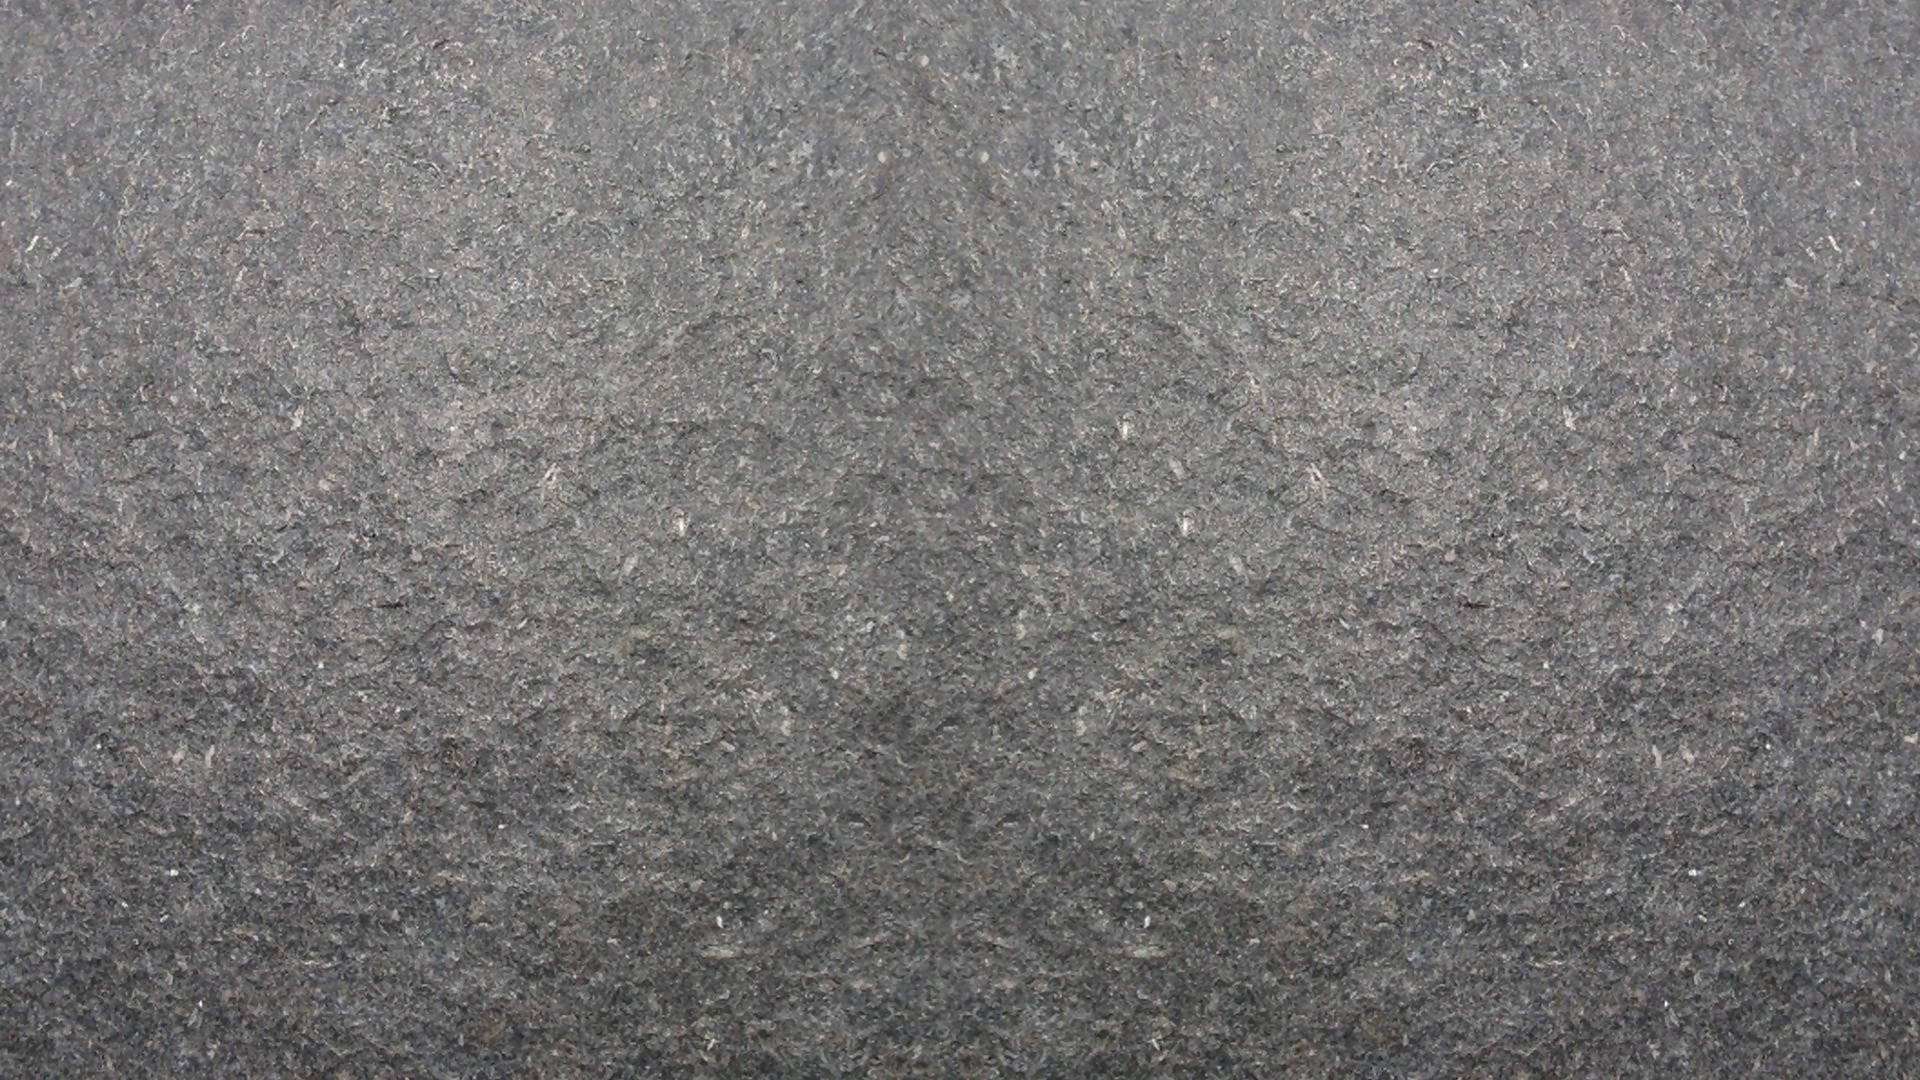 NERO ASSOLUTO ANTIQUE GRANITE,Granite,Blyth Marble Ltd,www.work-tops.com